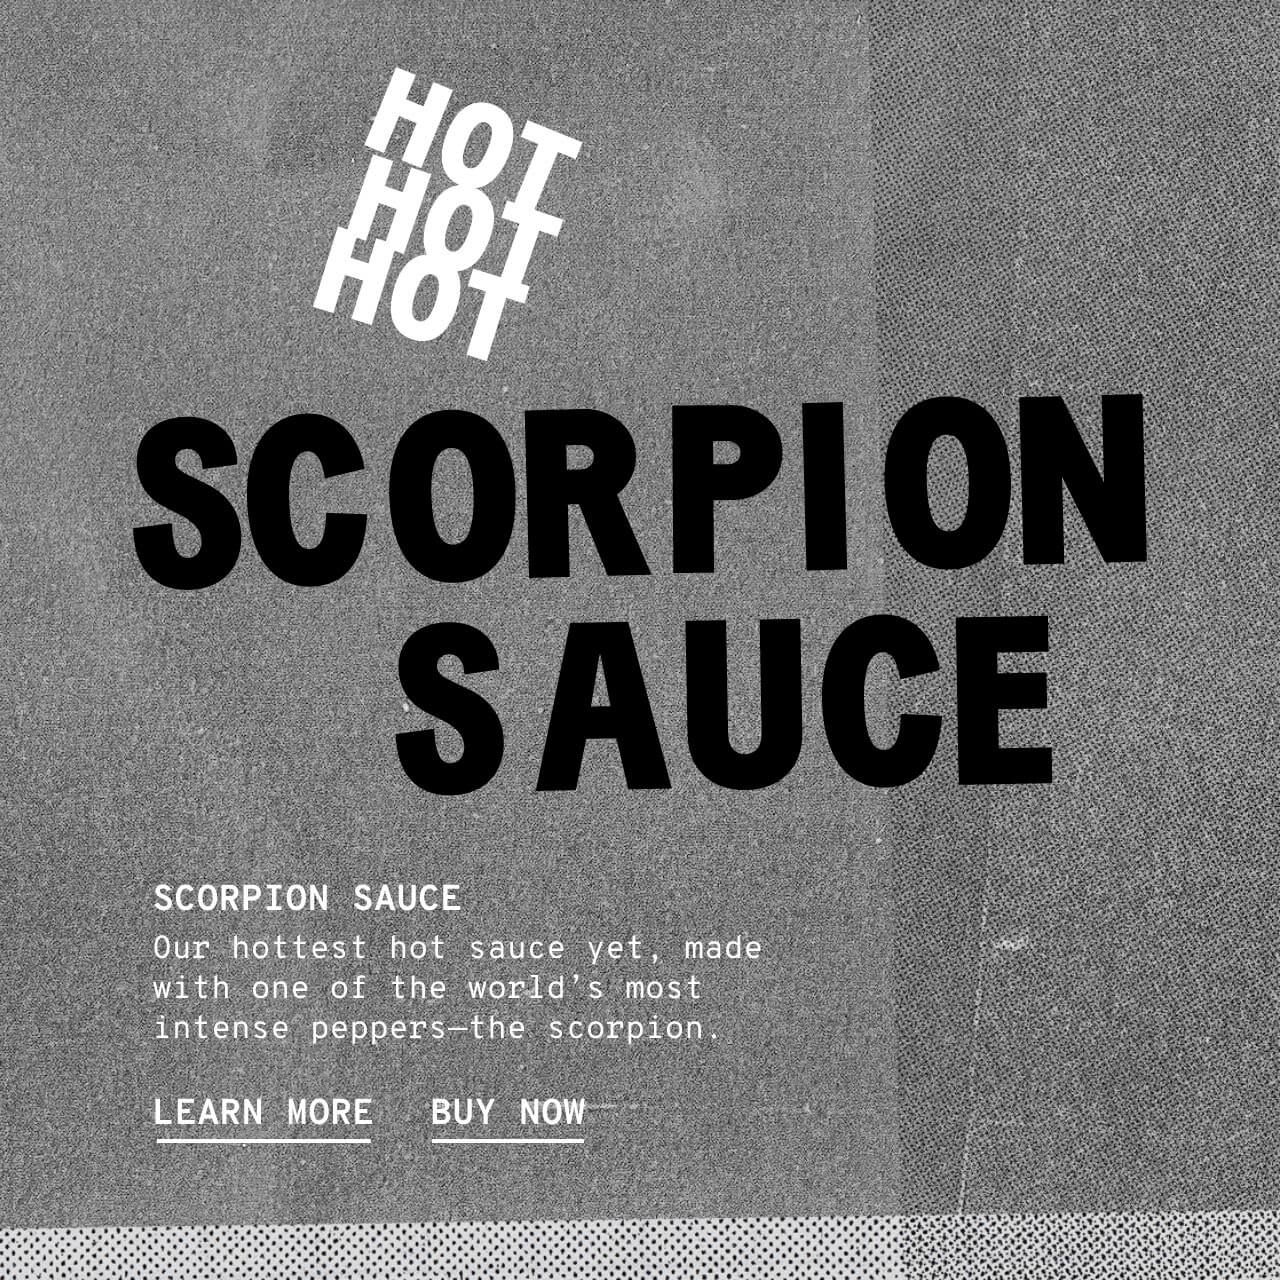 Scorpion Sauce - Description